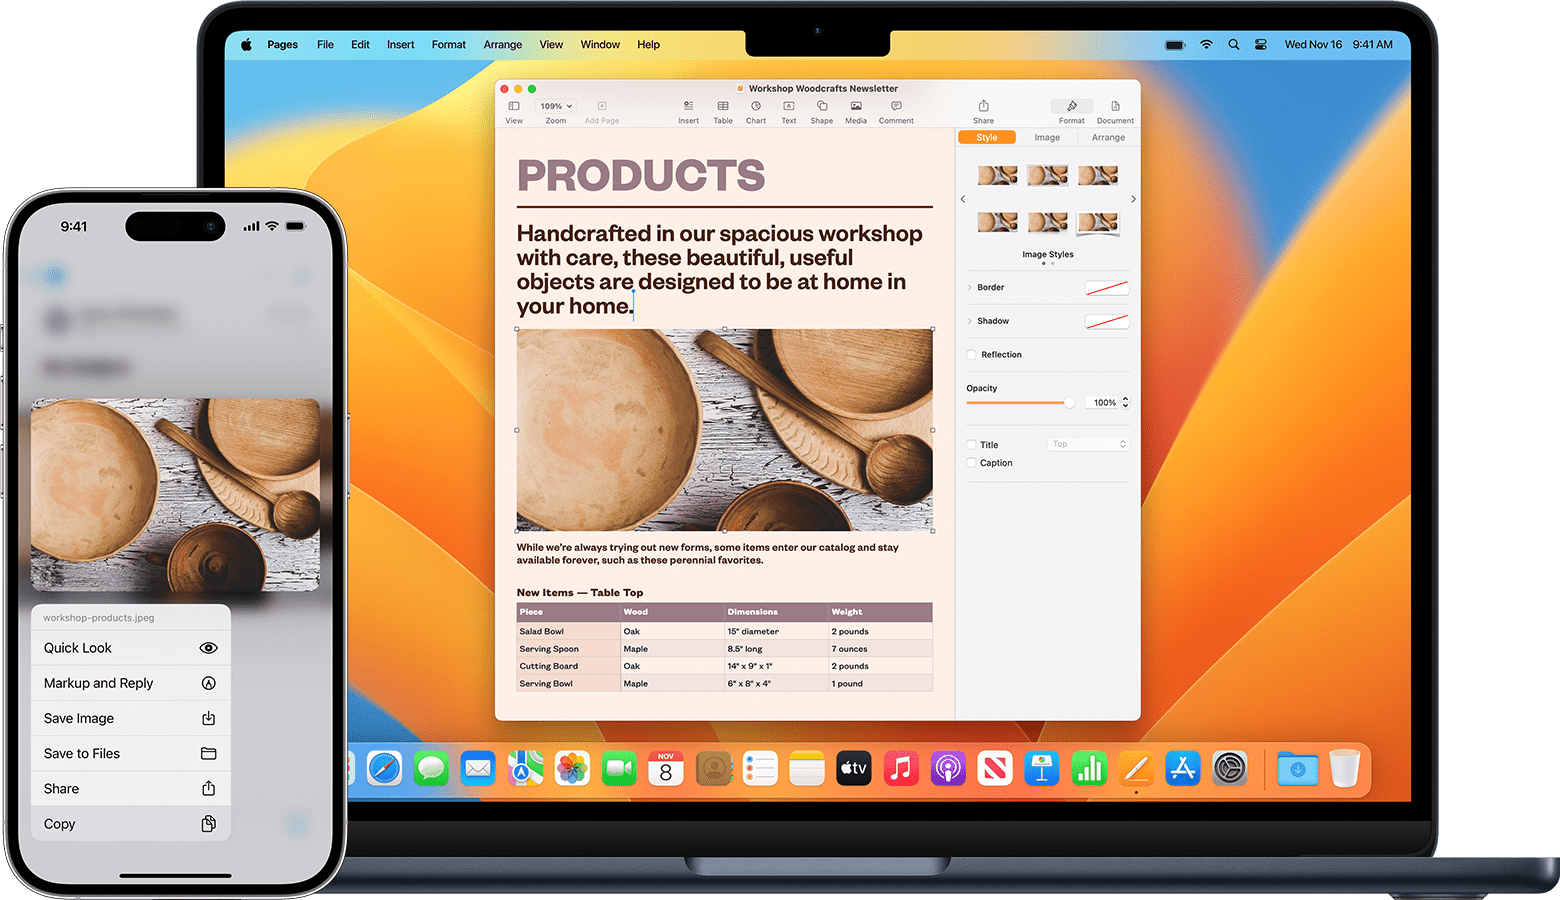 clipboard app for mac